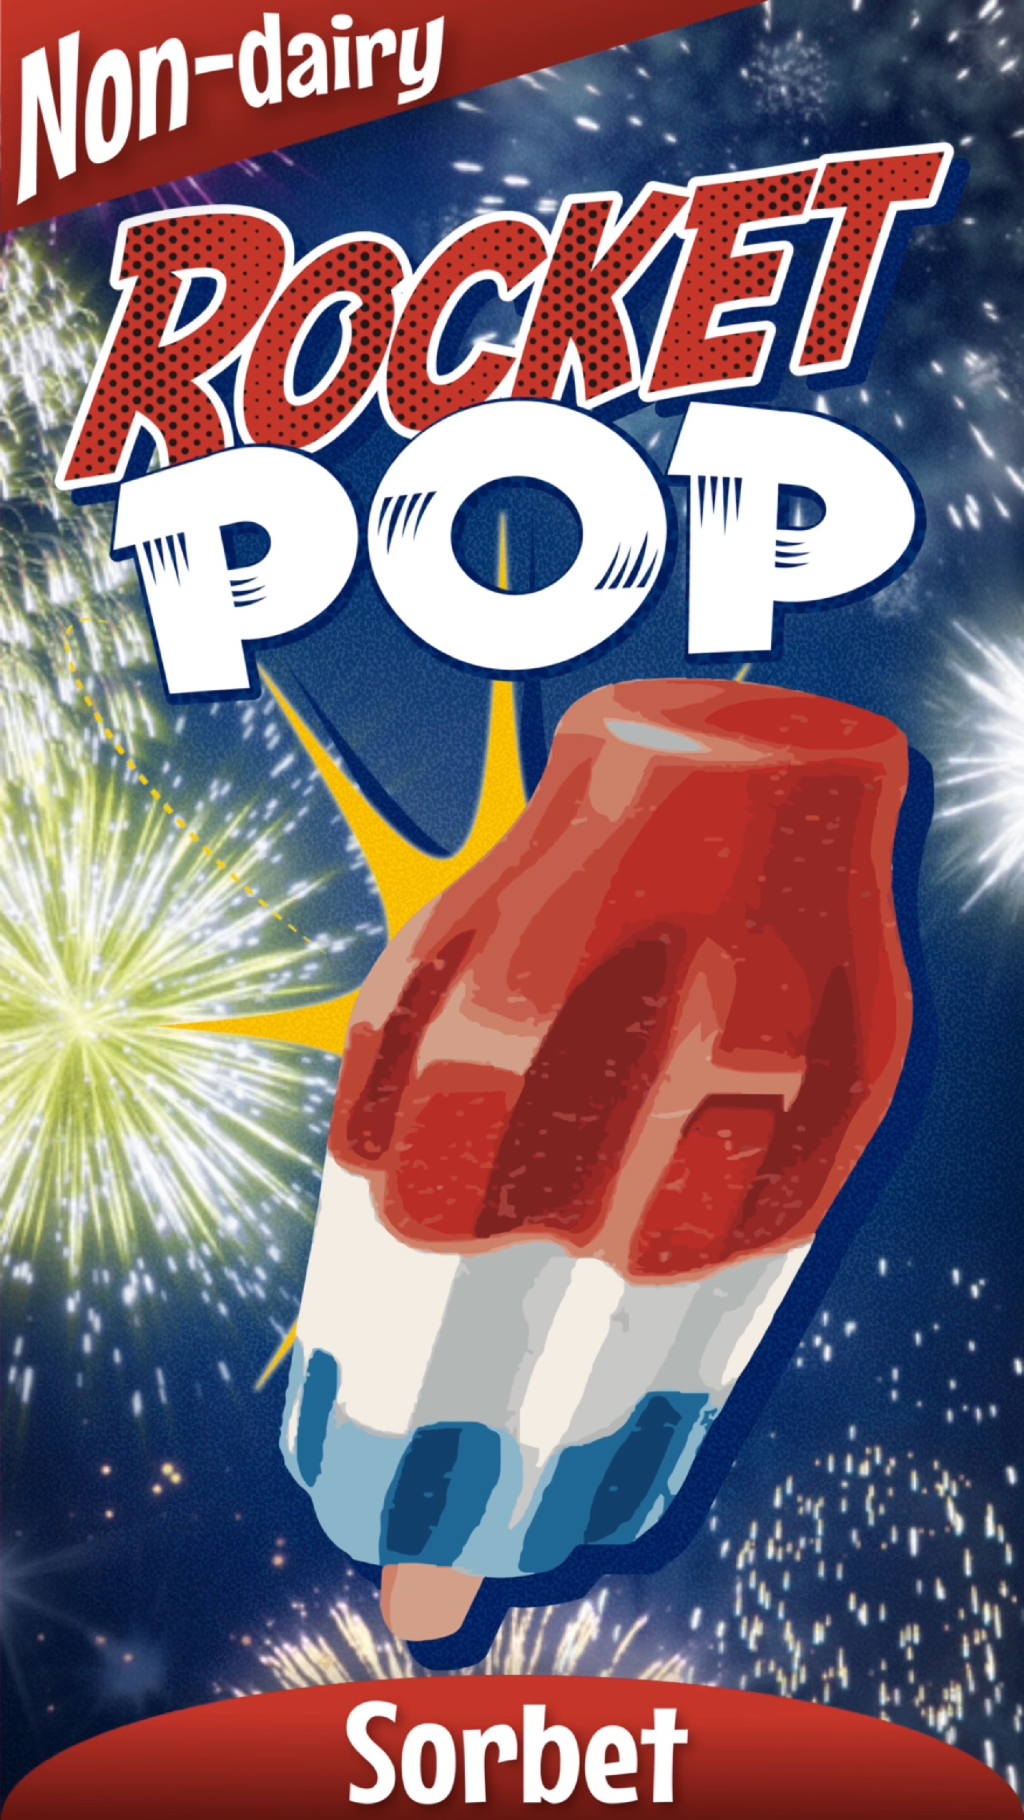 Cool King “Rocket Pop” Sorbet Advertisement and Flavor Card